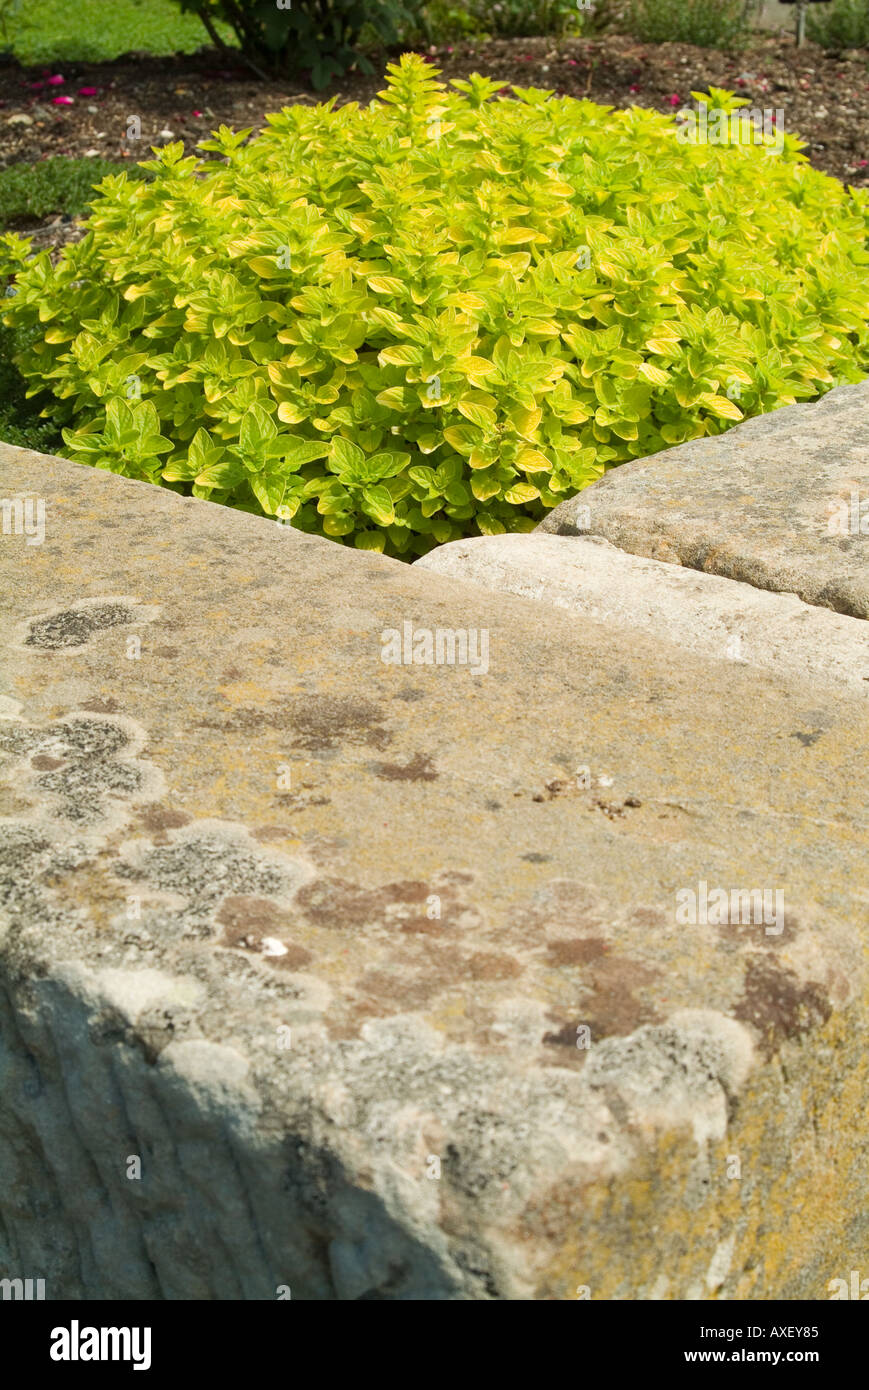 Oreganum var Aureum contrasted against a warm stone wall Stock Photo